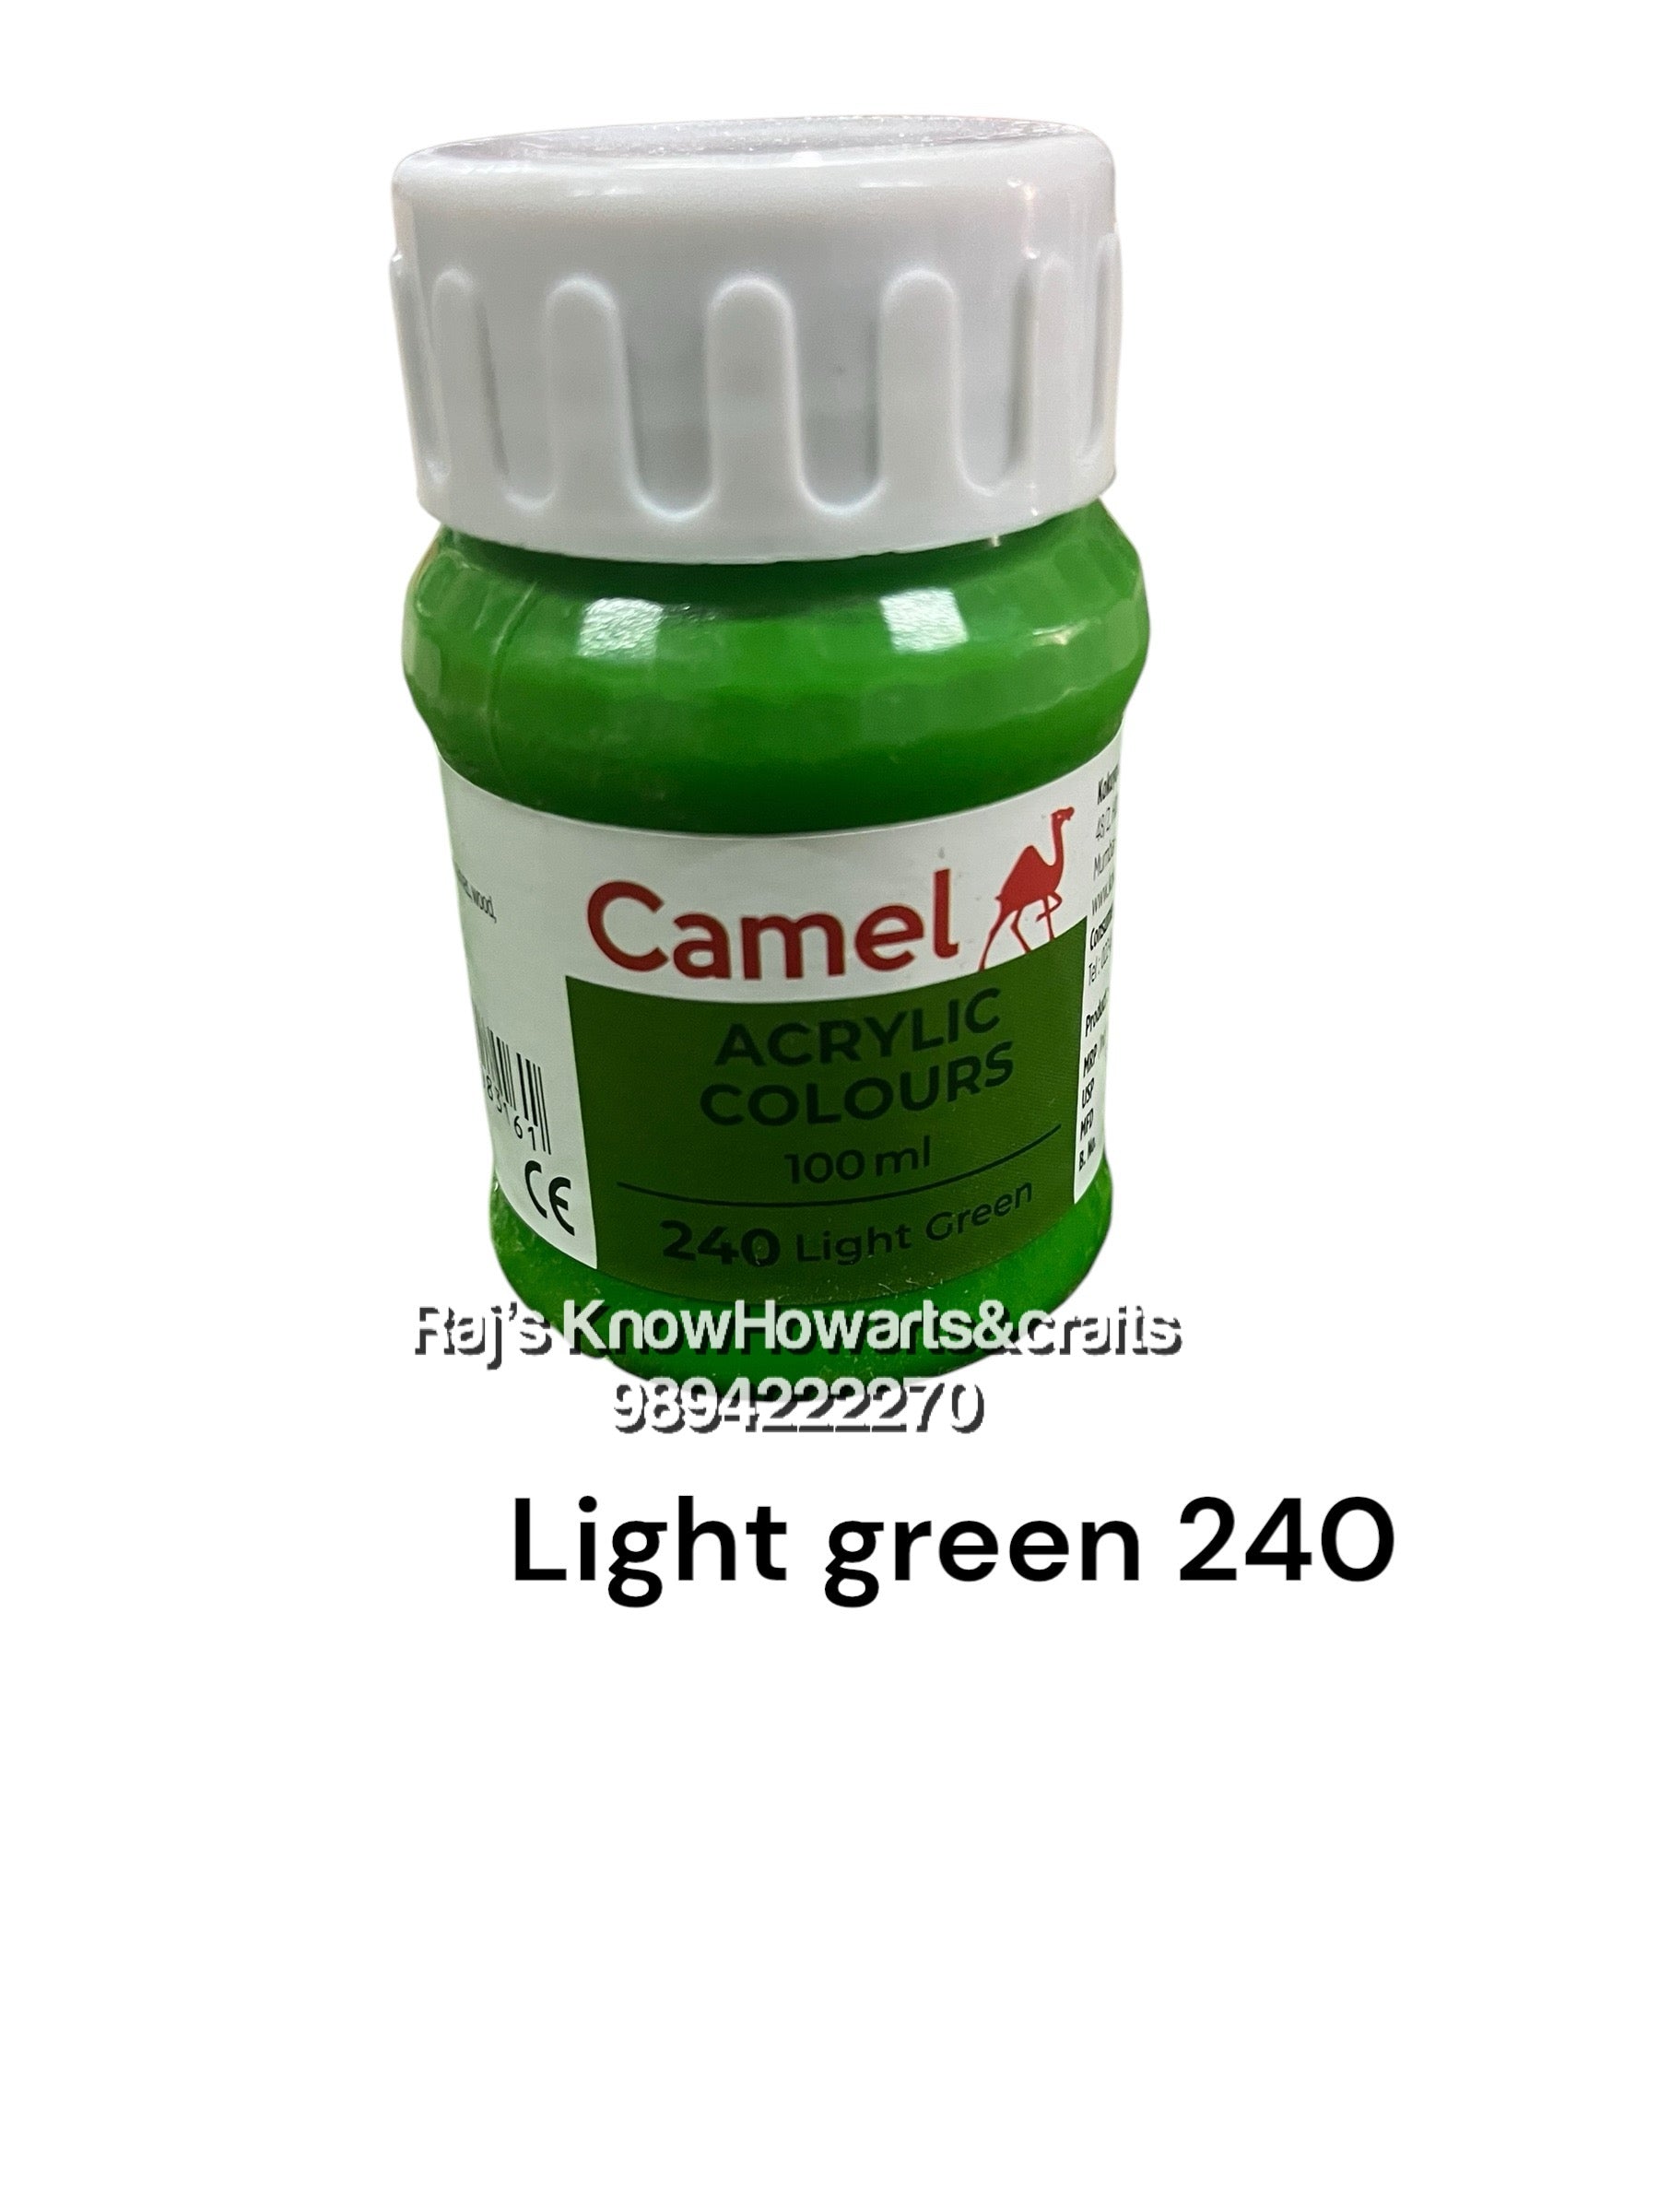 Camel Acrylic colours light green 240 - 100 ml